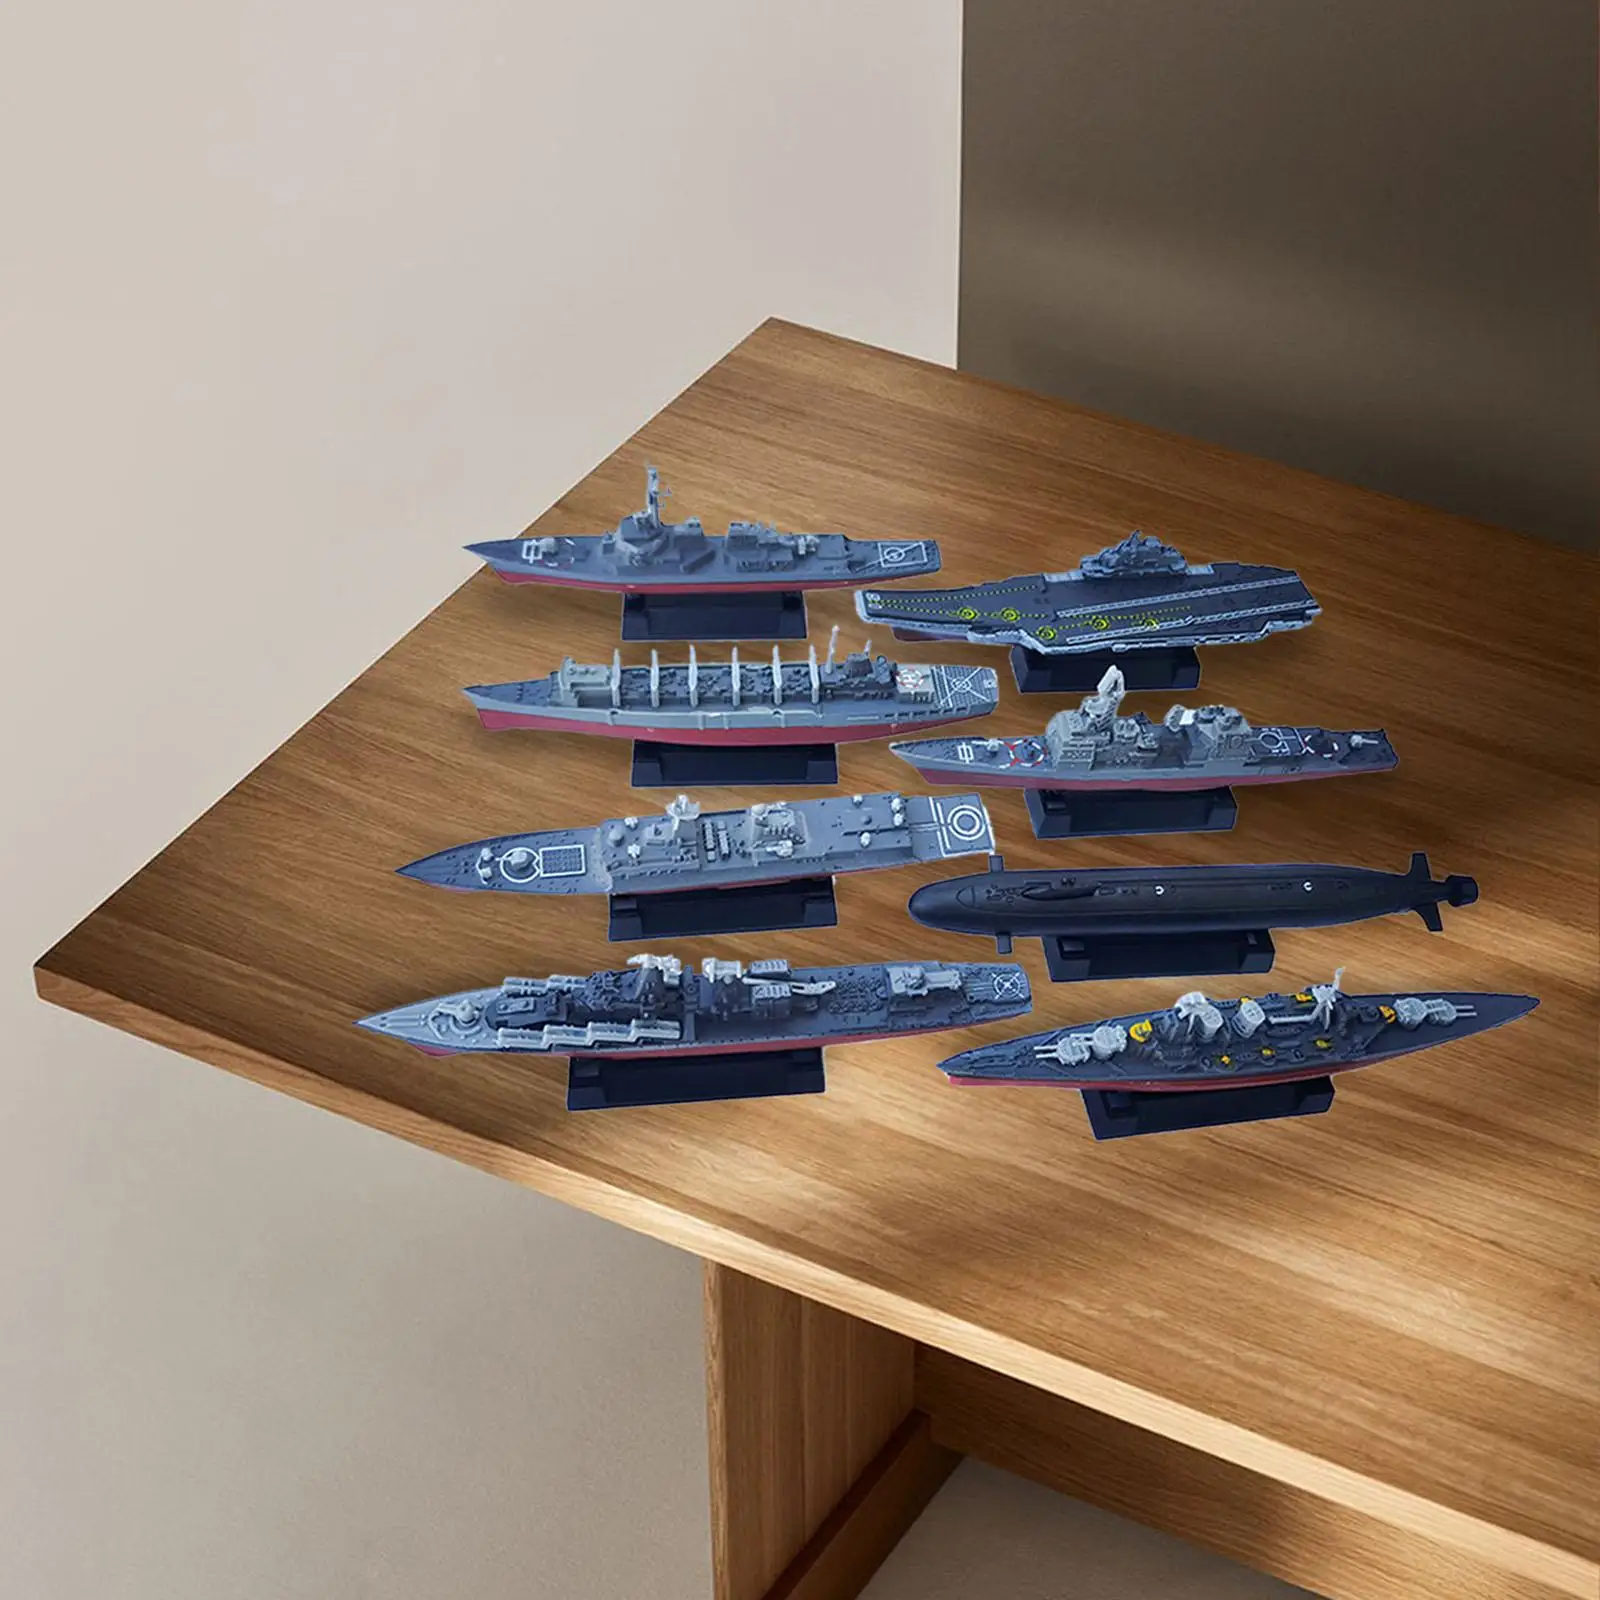 8x Aircraft Model Educational Toys Navy Ship Plastic Model Warships Ship Kits for Girls Kids Adults Boys Birthday Gifts